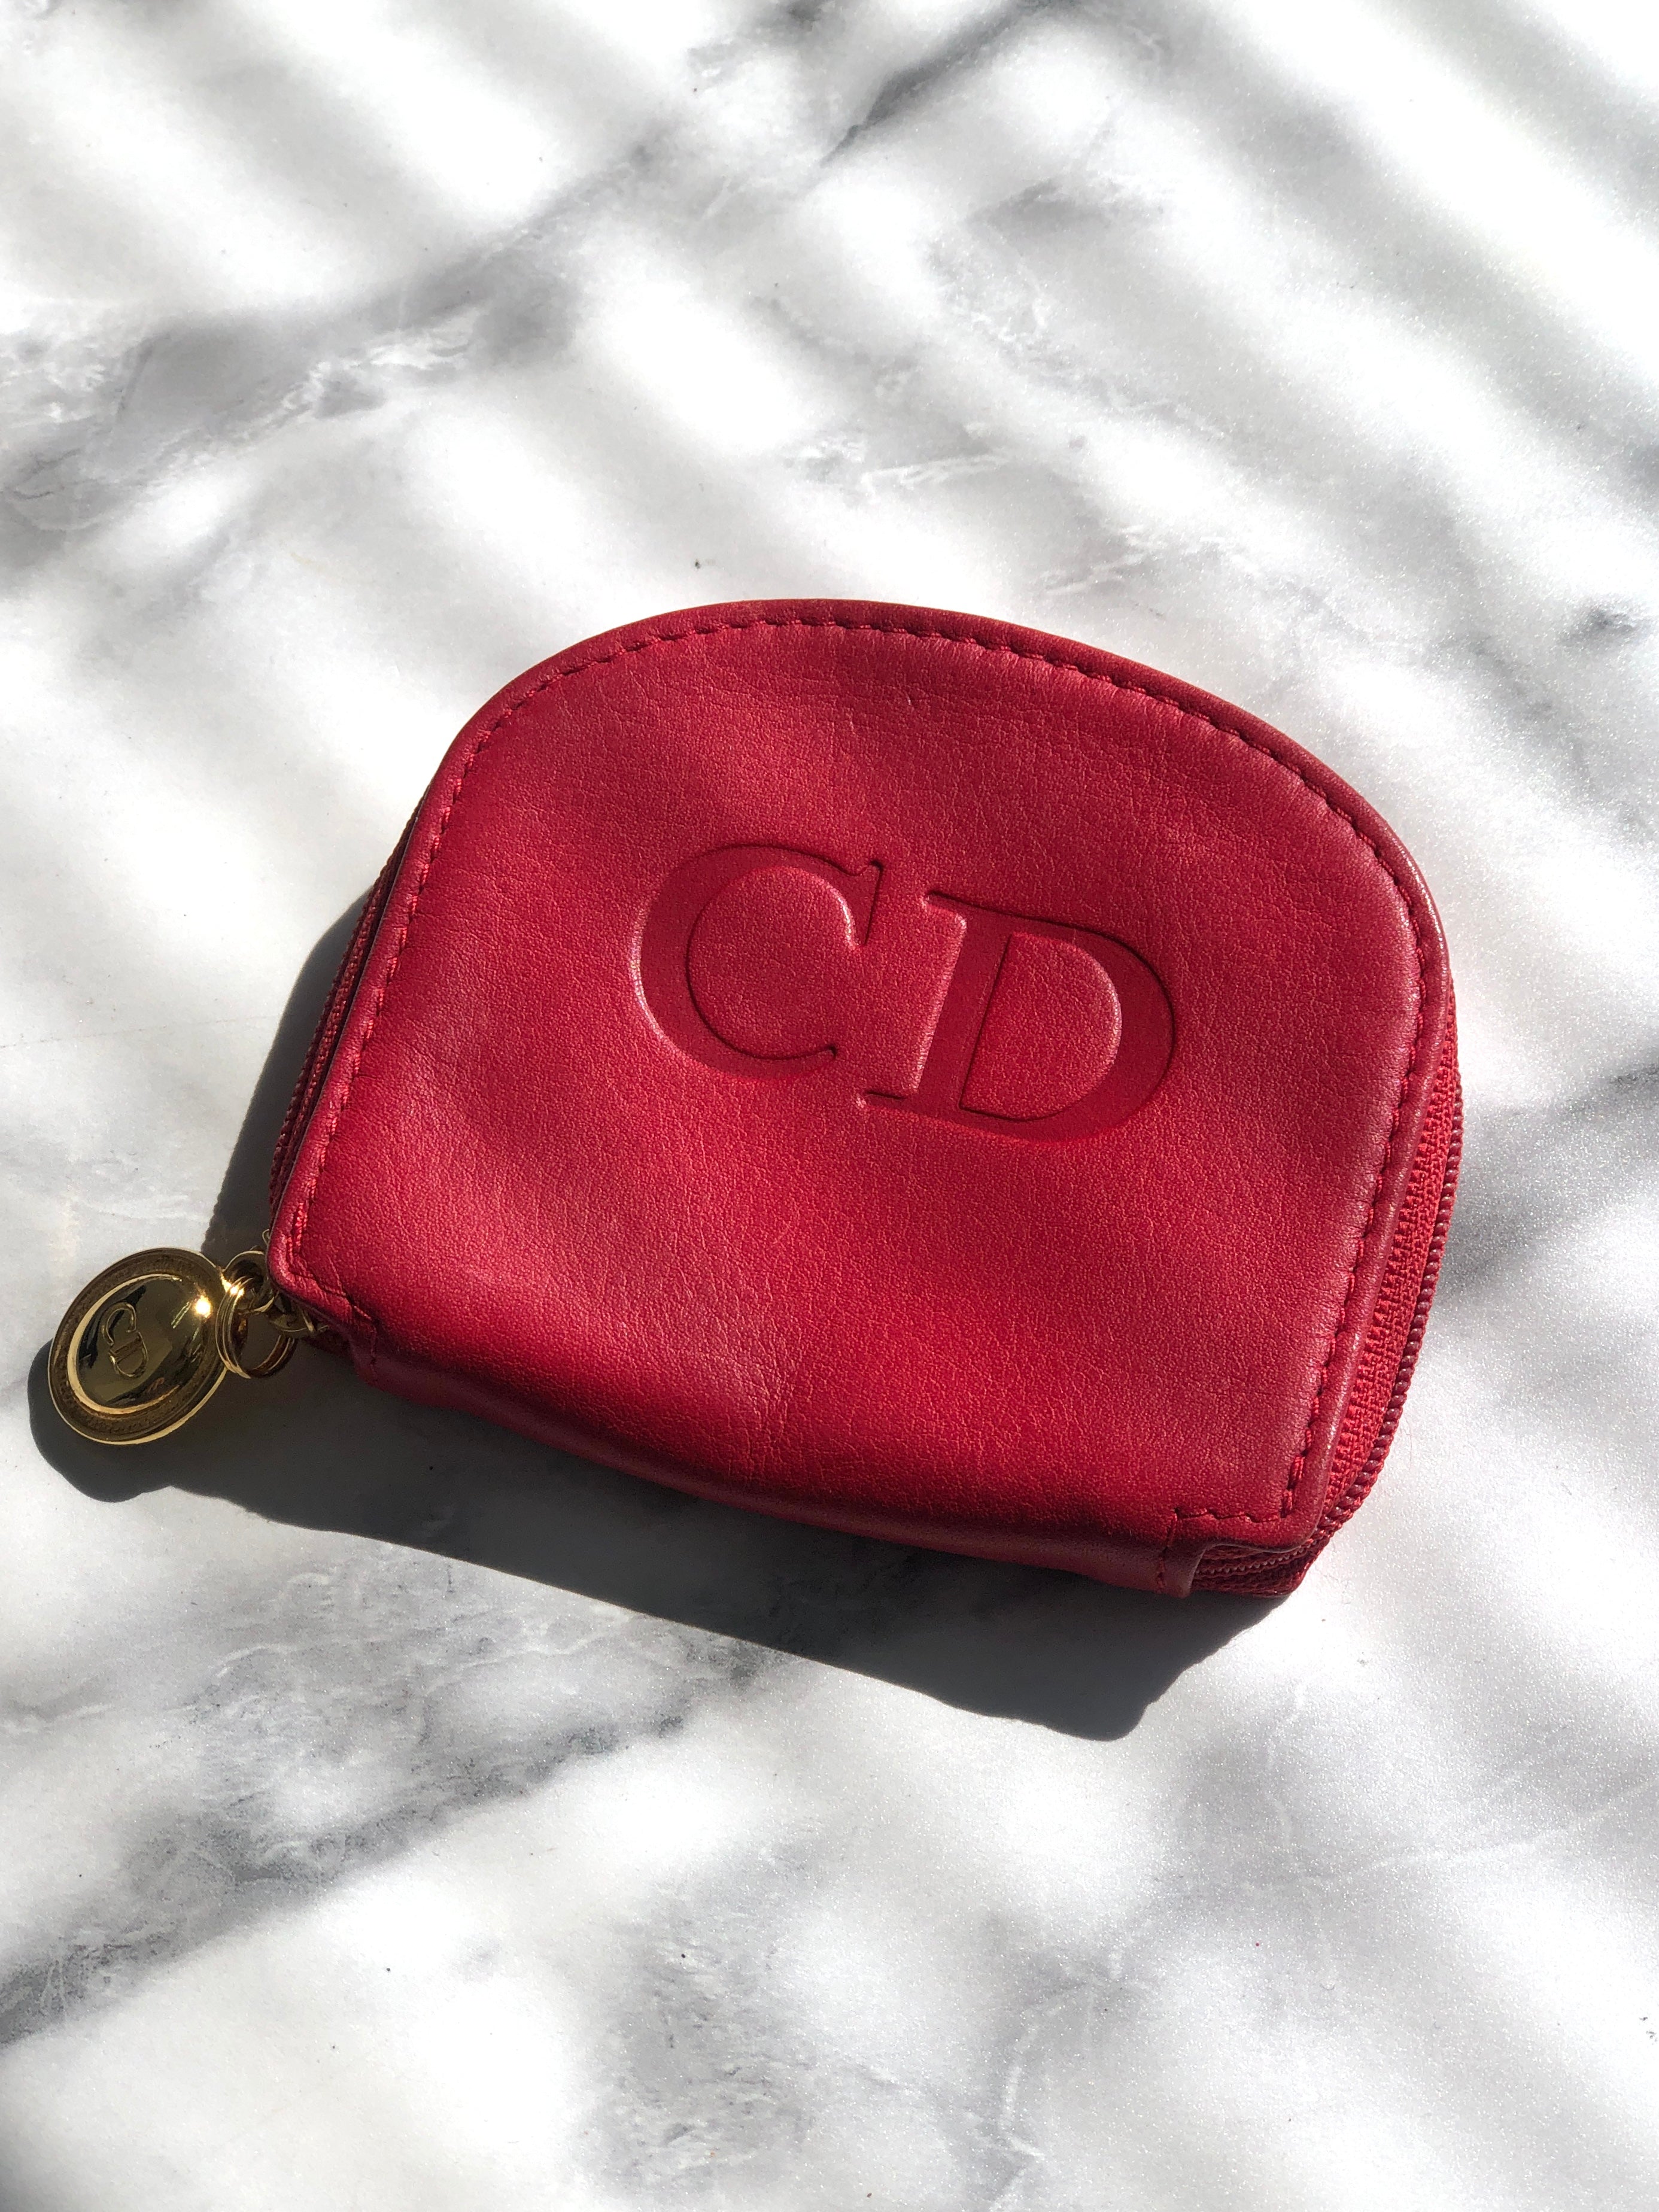 Miss Dior Top Handle Bag Amaryllis Red Cannage Lambskin | DIOR US